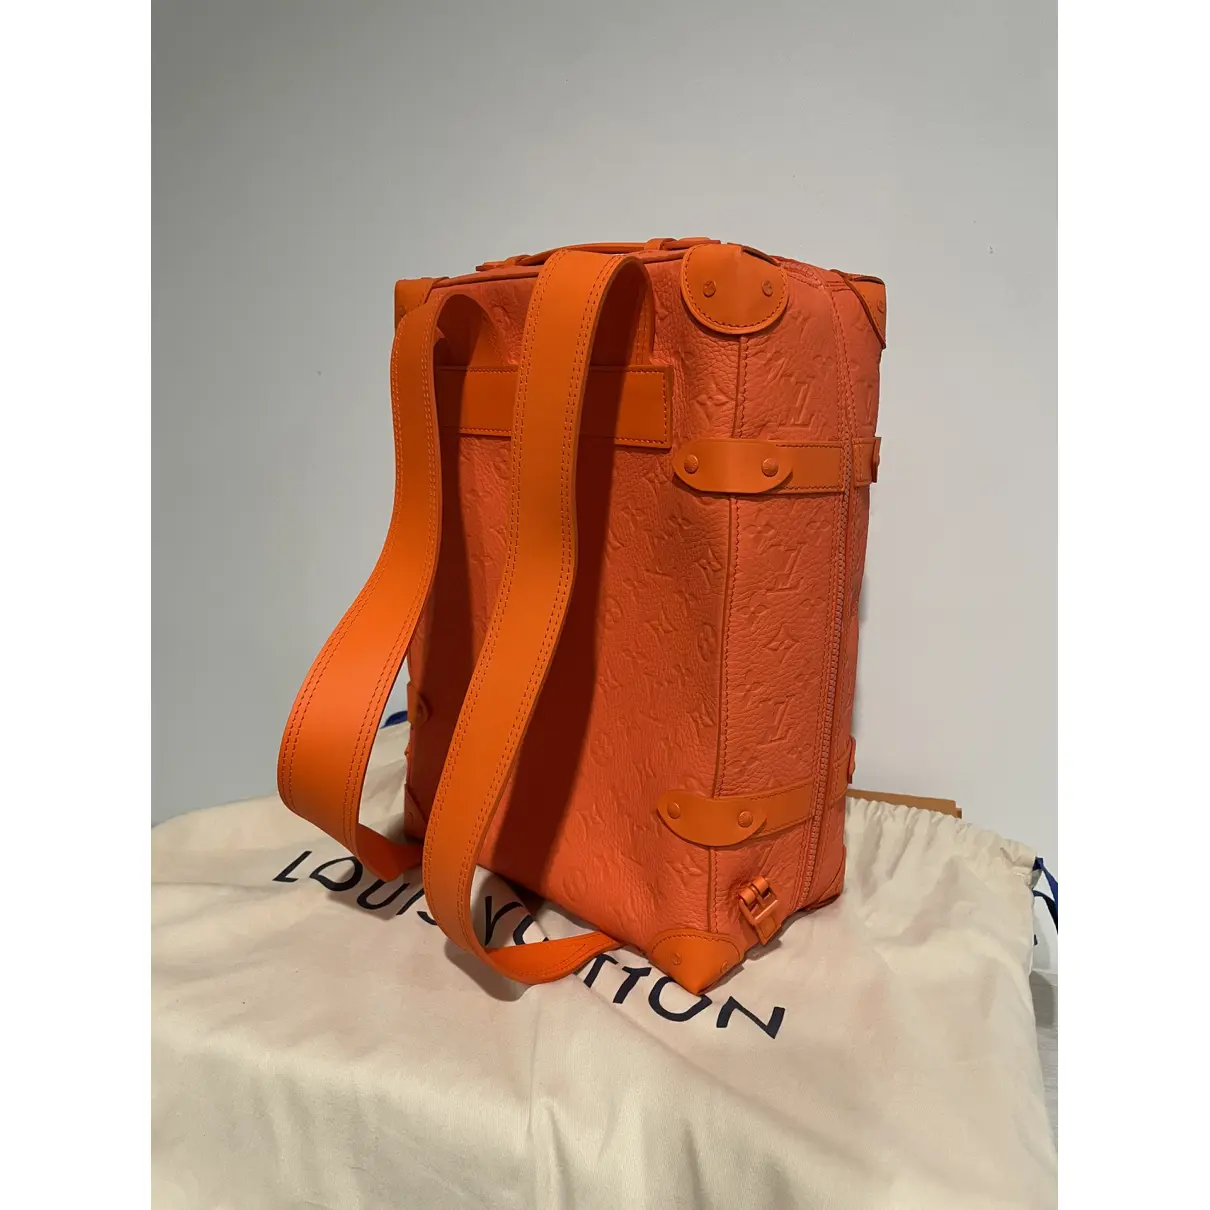 Trunk leather bag Louis Vuitton